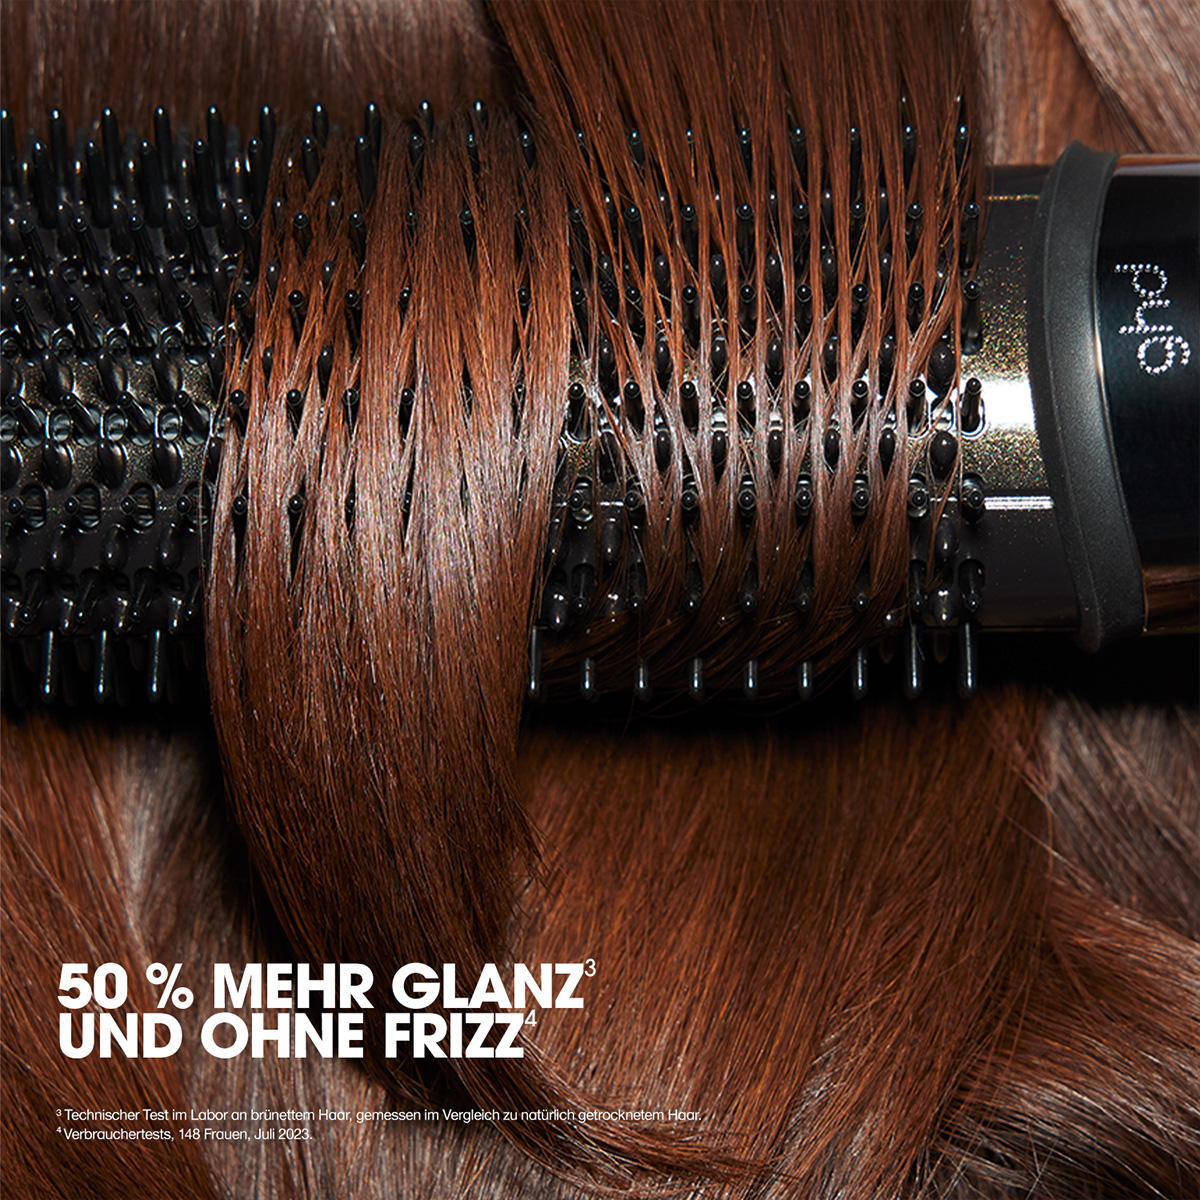 ghd duet blowdry Hair Dryer Brush noir - 4